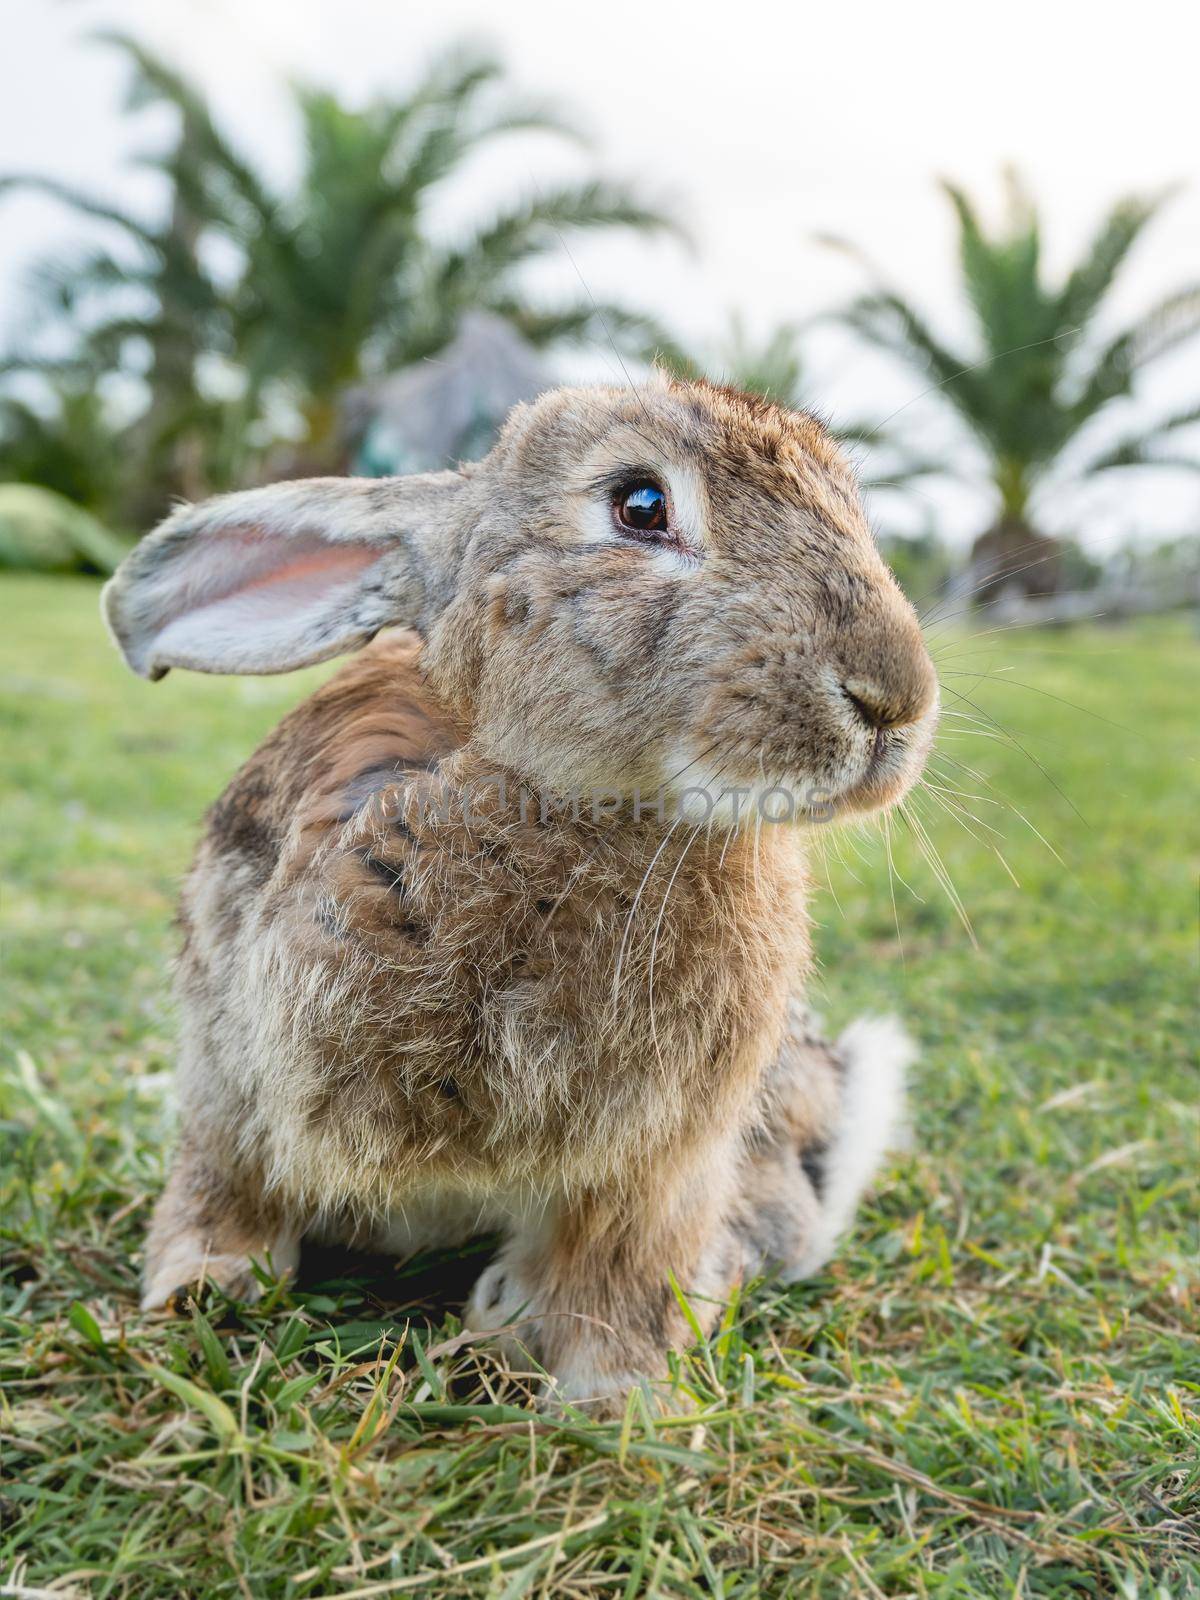 Portrait of cute bunny on lawn. Fluffy rabbit on green grass is staring in camera. Farm animal is grazing on field outdoors. by aksenovko